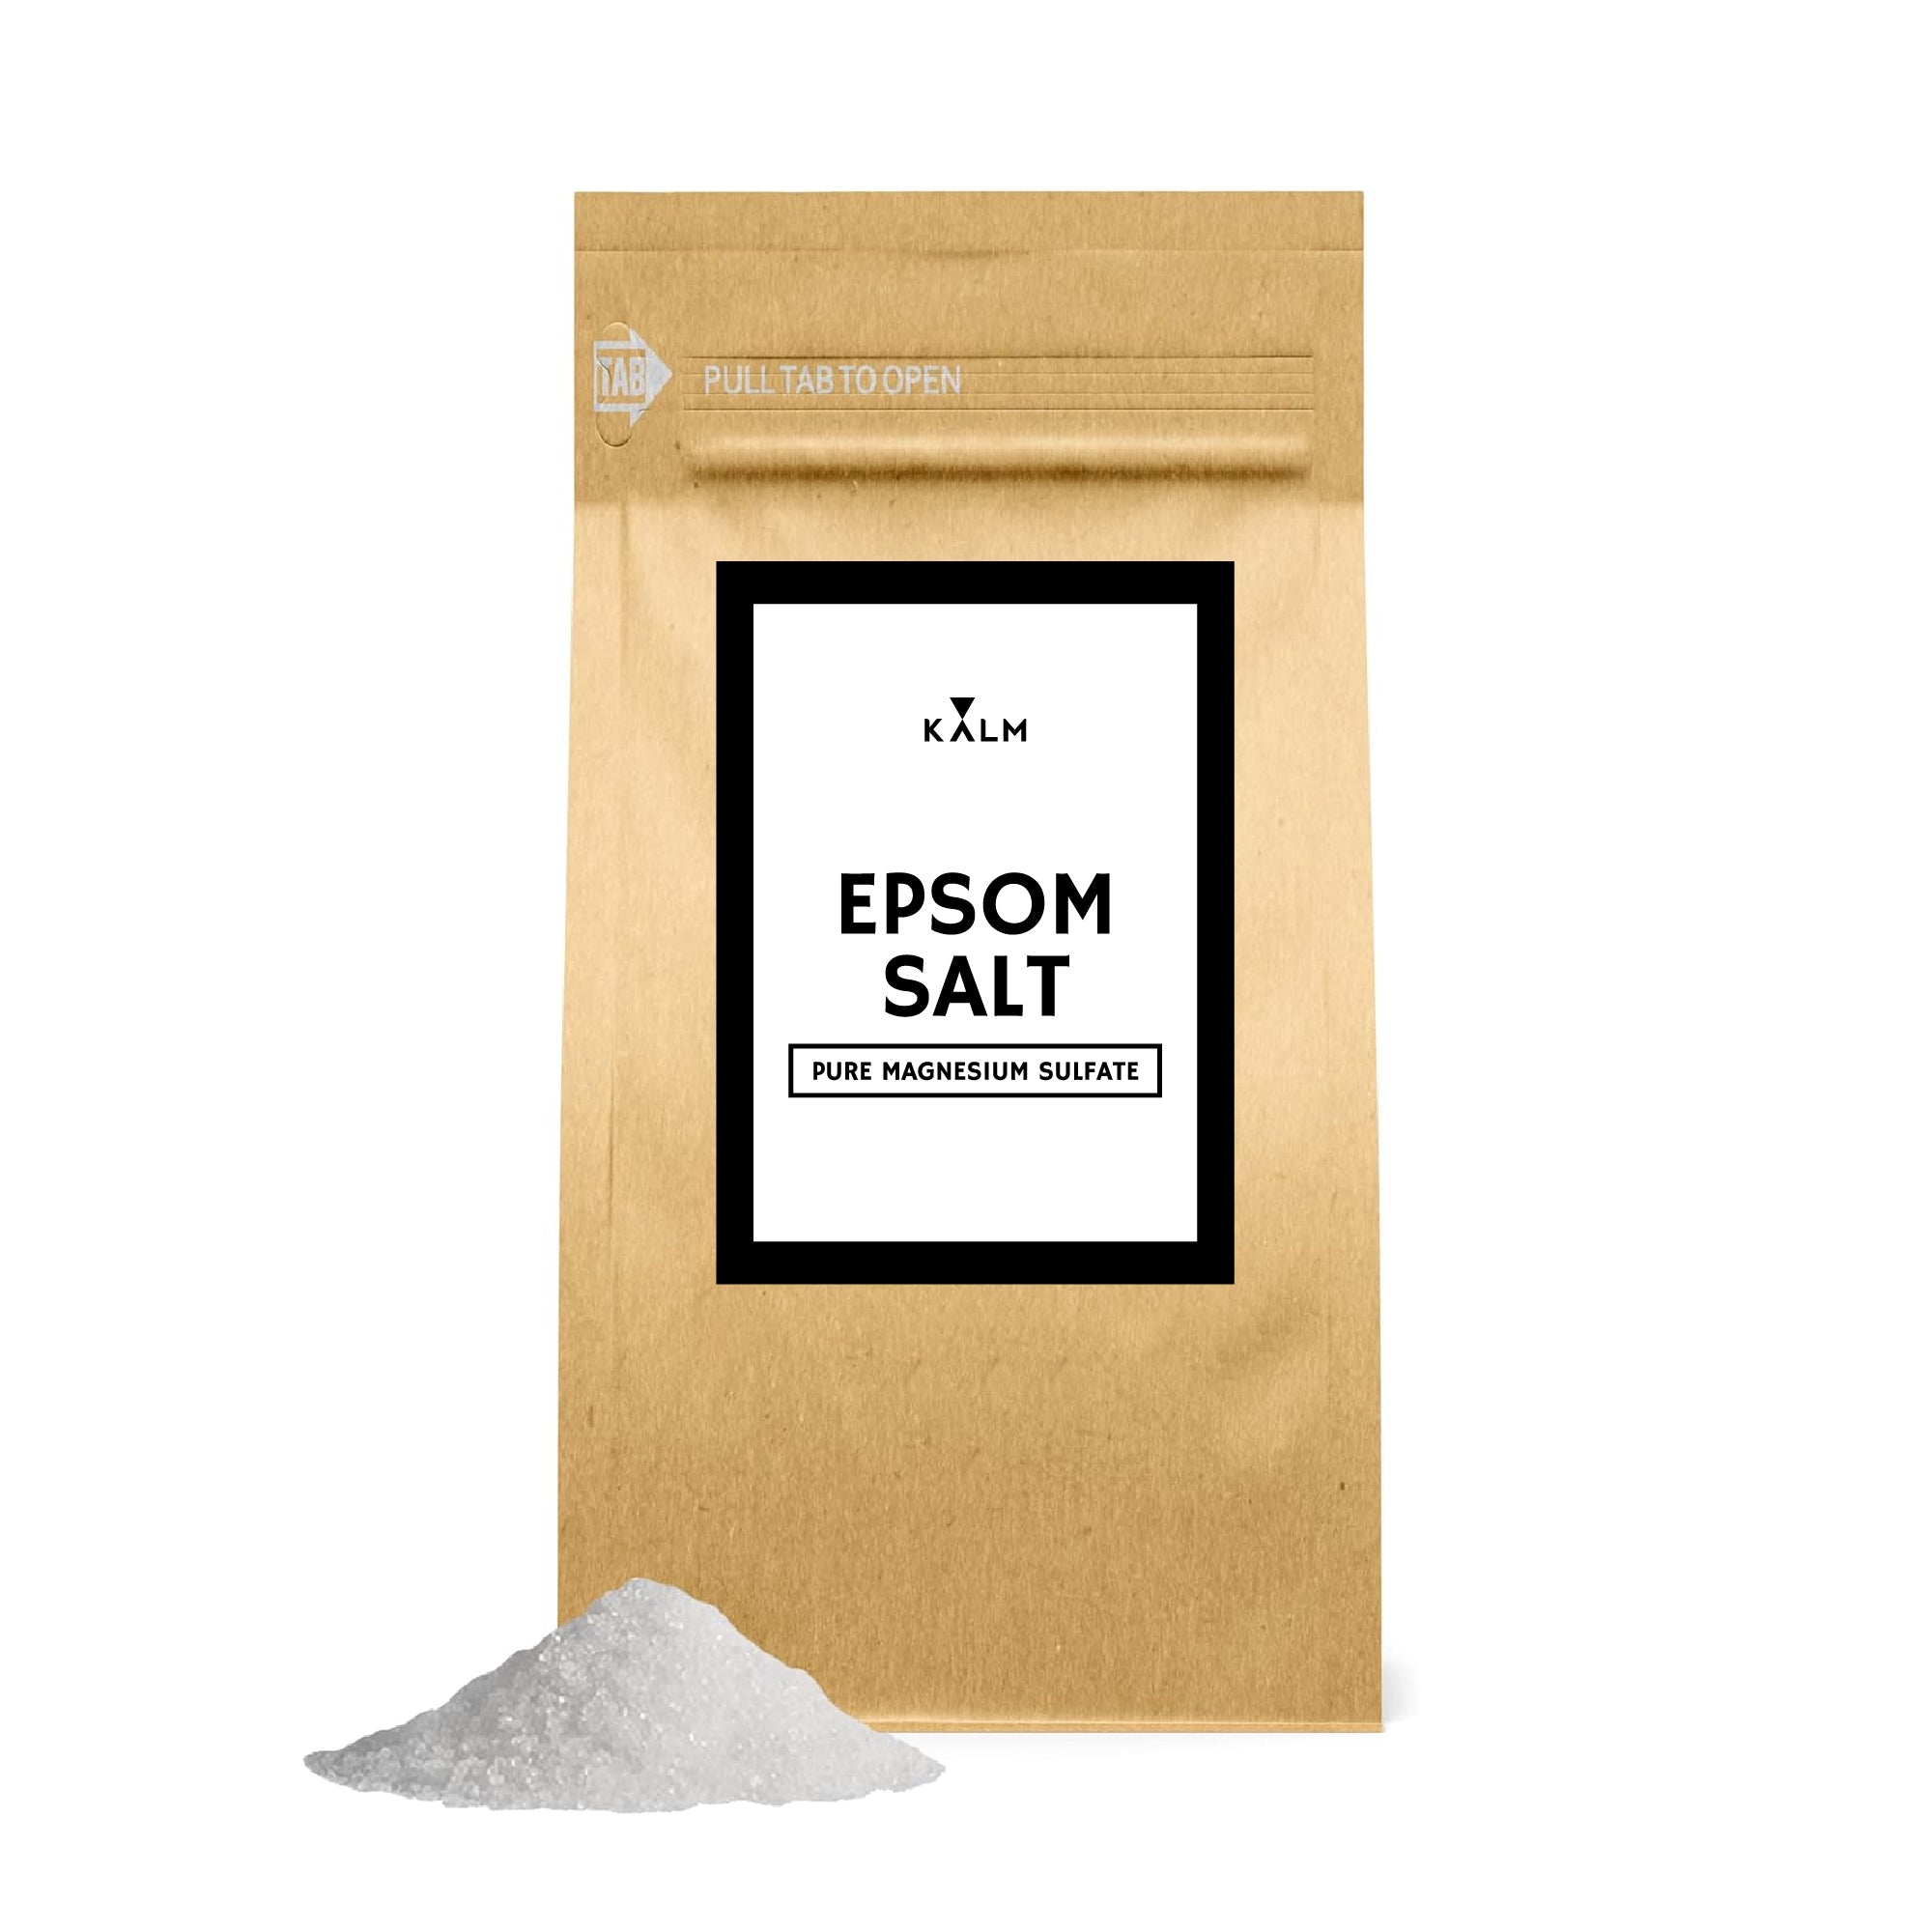 Kalm Epsom Salt for Ice Bath and Cold Plunge